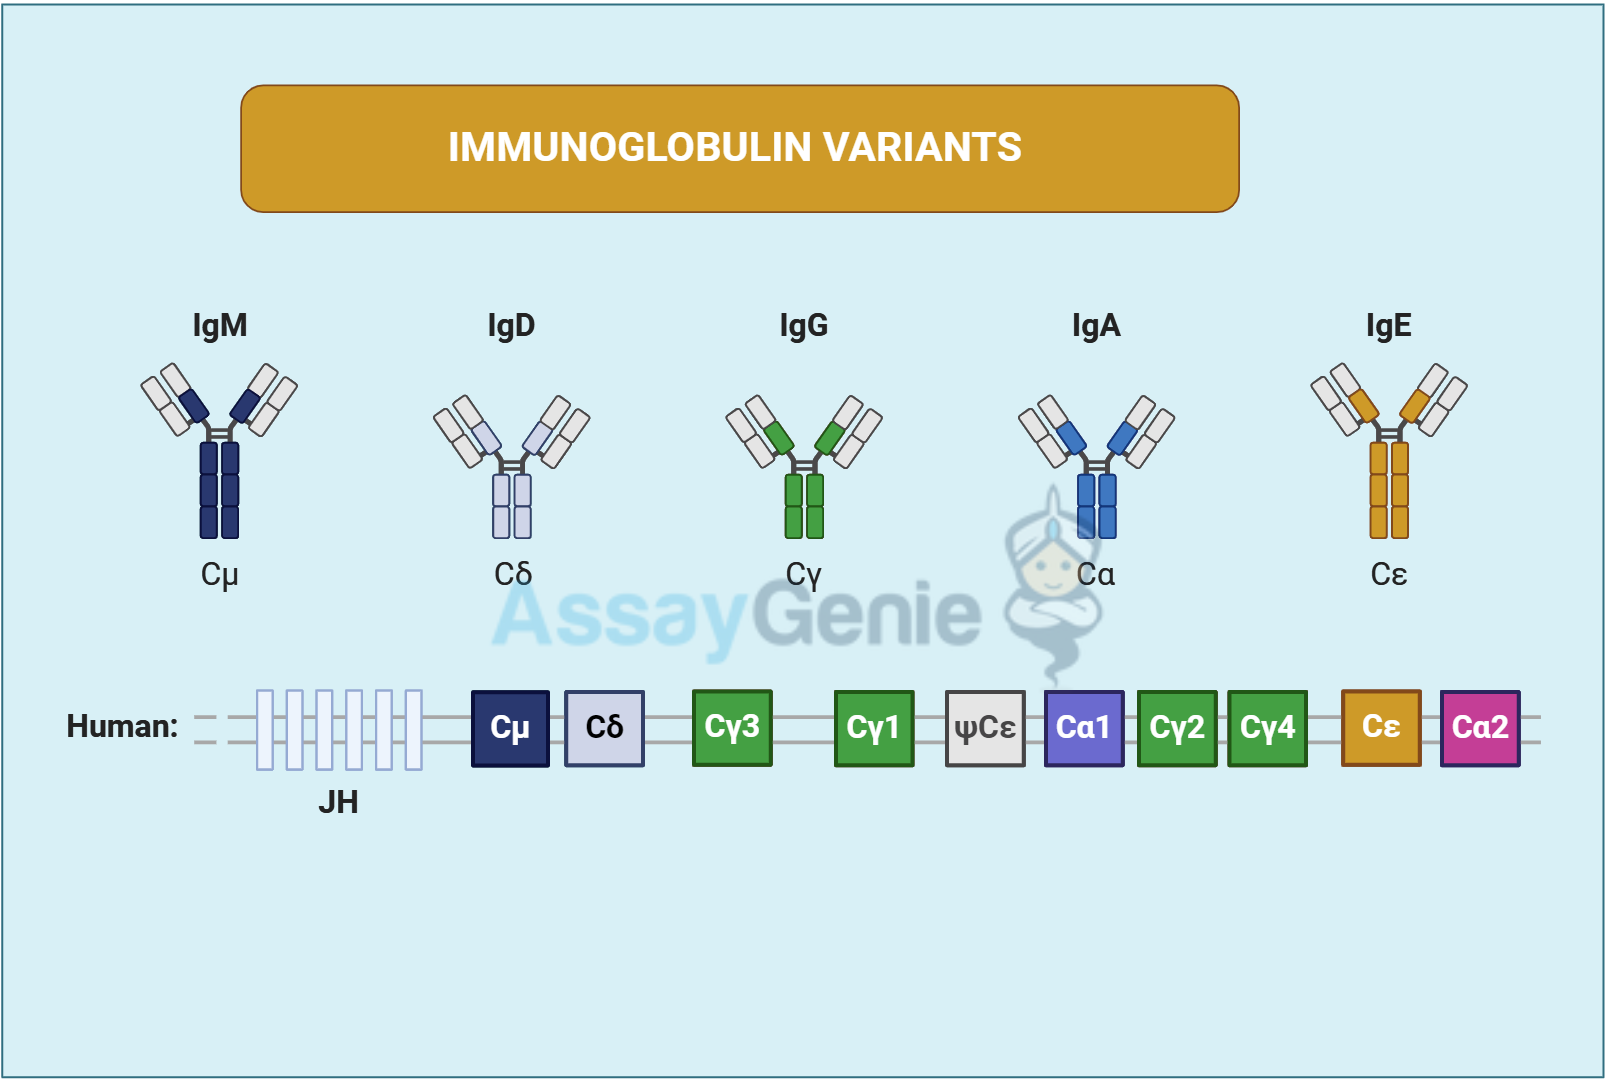 Variants of immunoglobulin